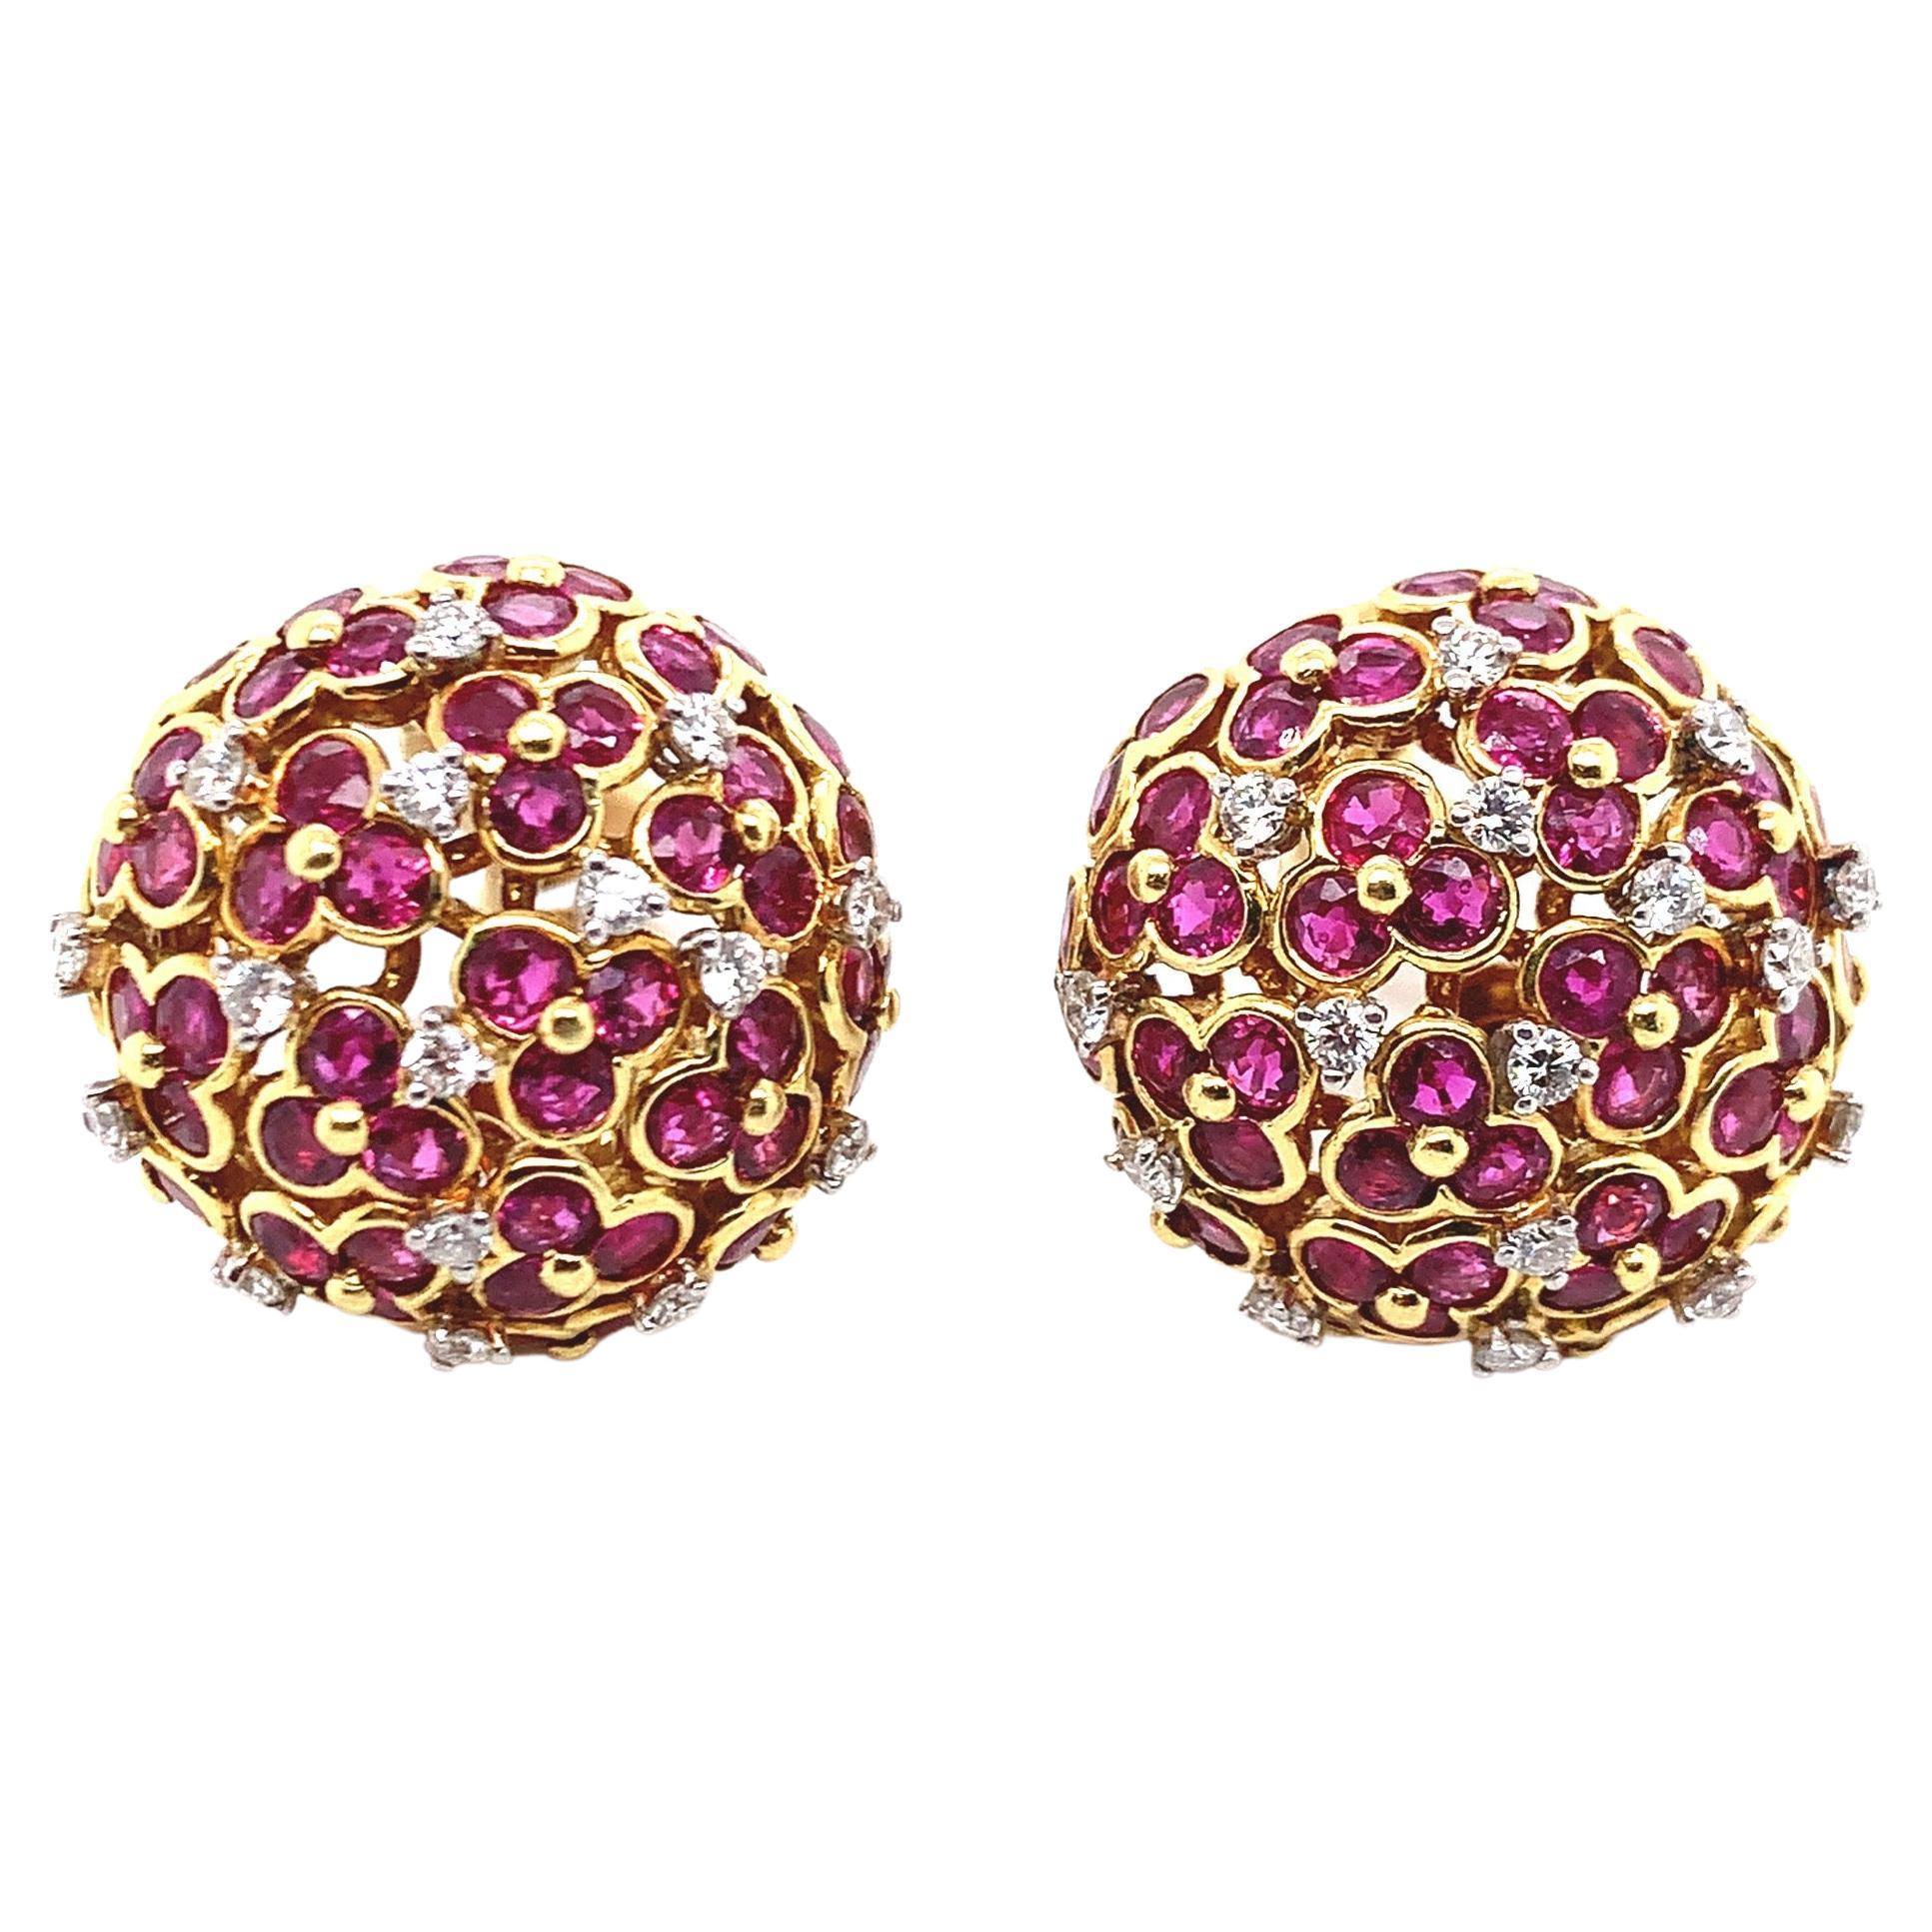 Jean Vitau 18k Yellow Gold Ruby & Diamond Earrings